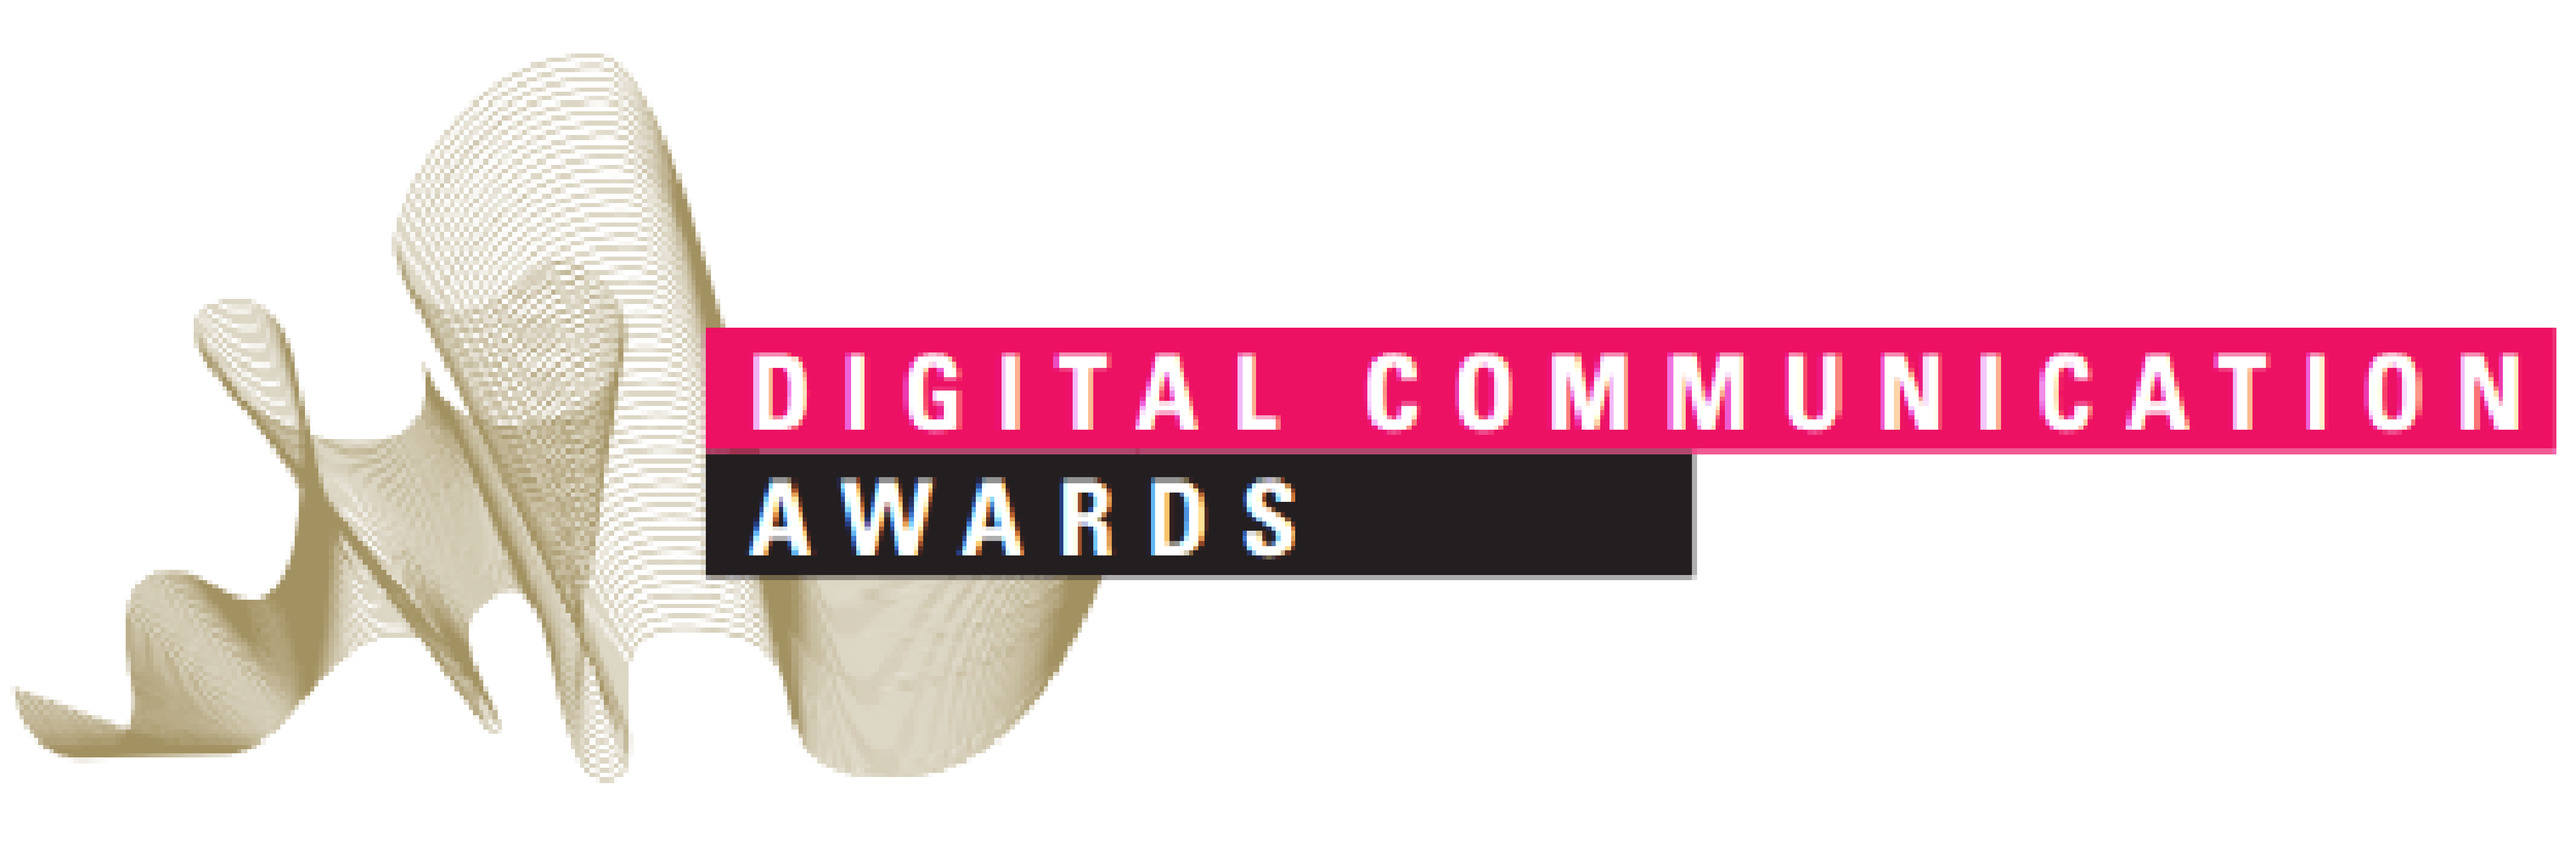 Digital Communication Logo - Digital Communication Awards